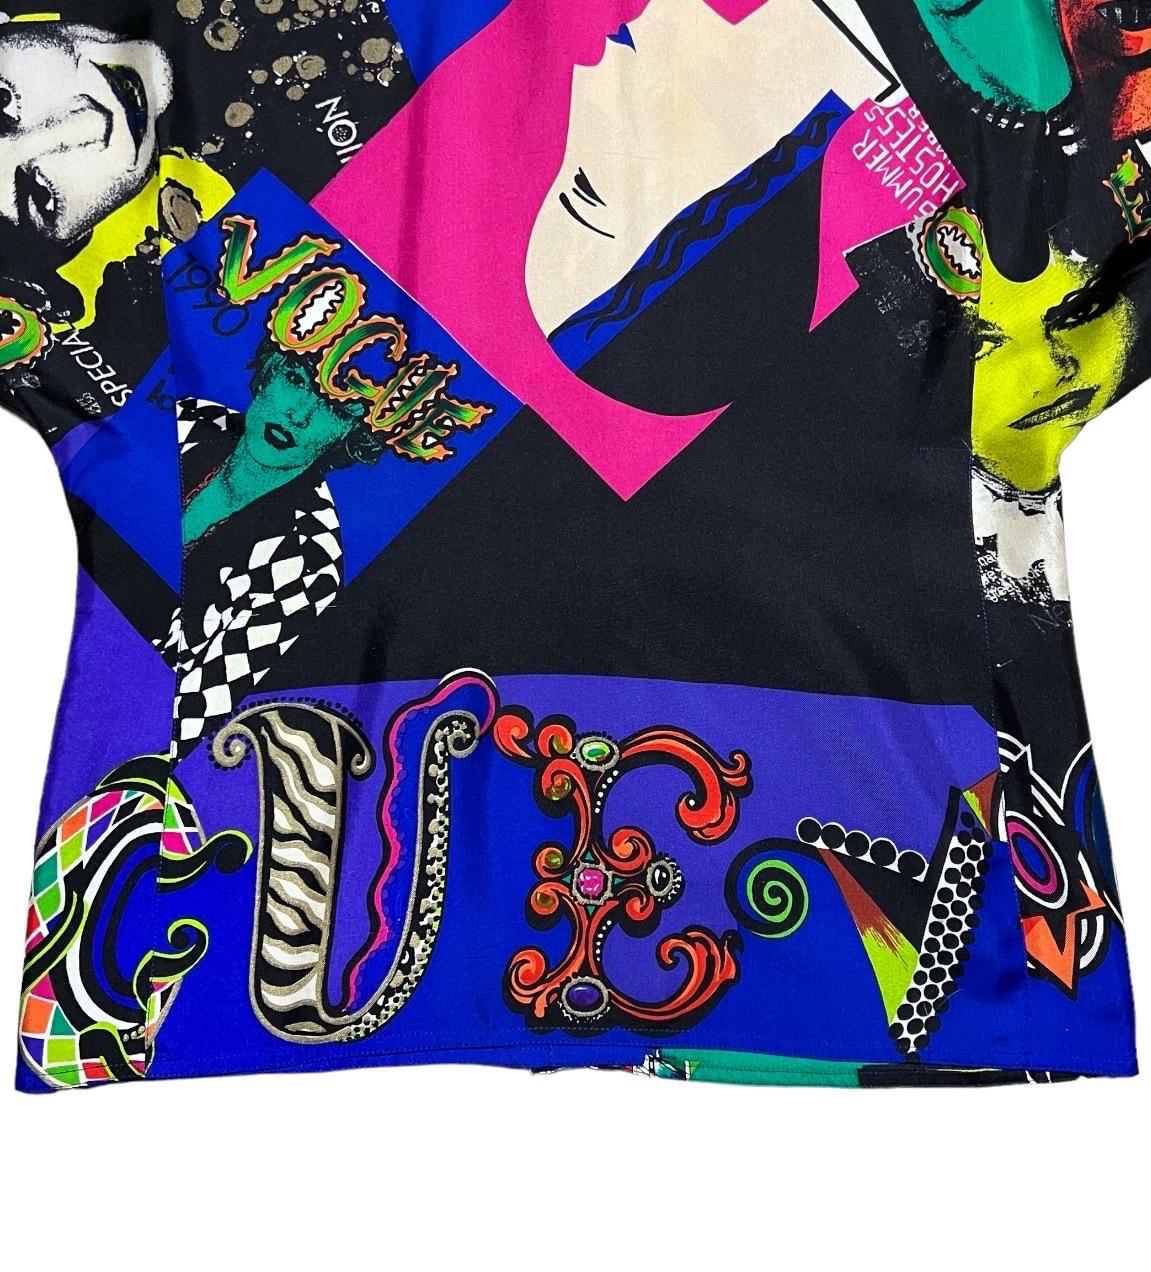 S/S 1991 Gianni Versace Vogue Pop Art Printed Silk Shirt For Sale 5